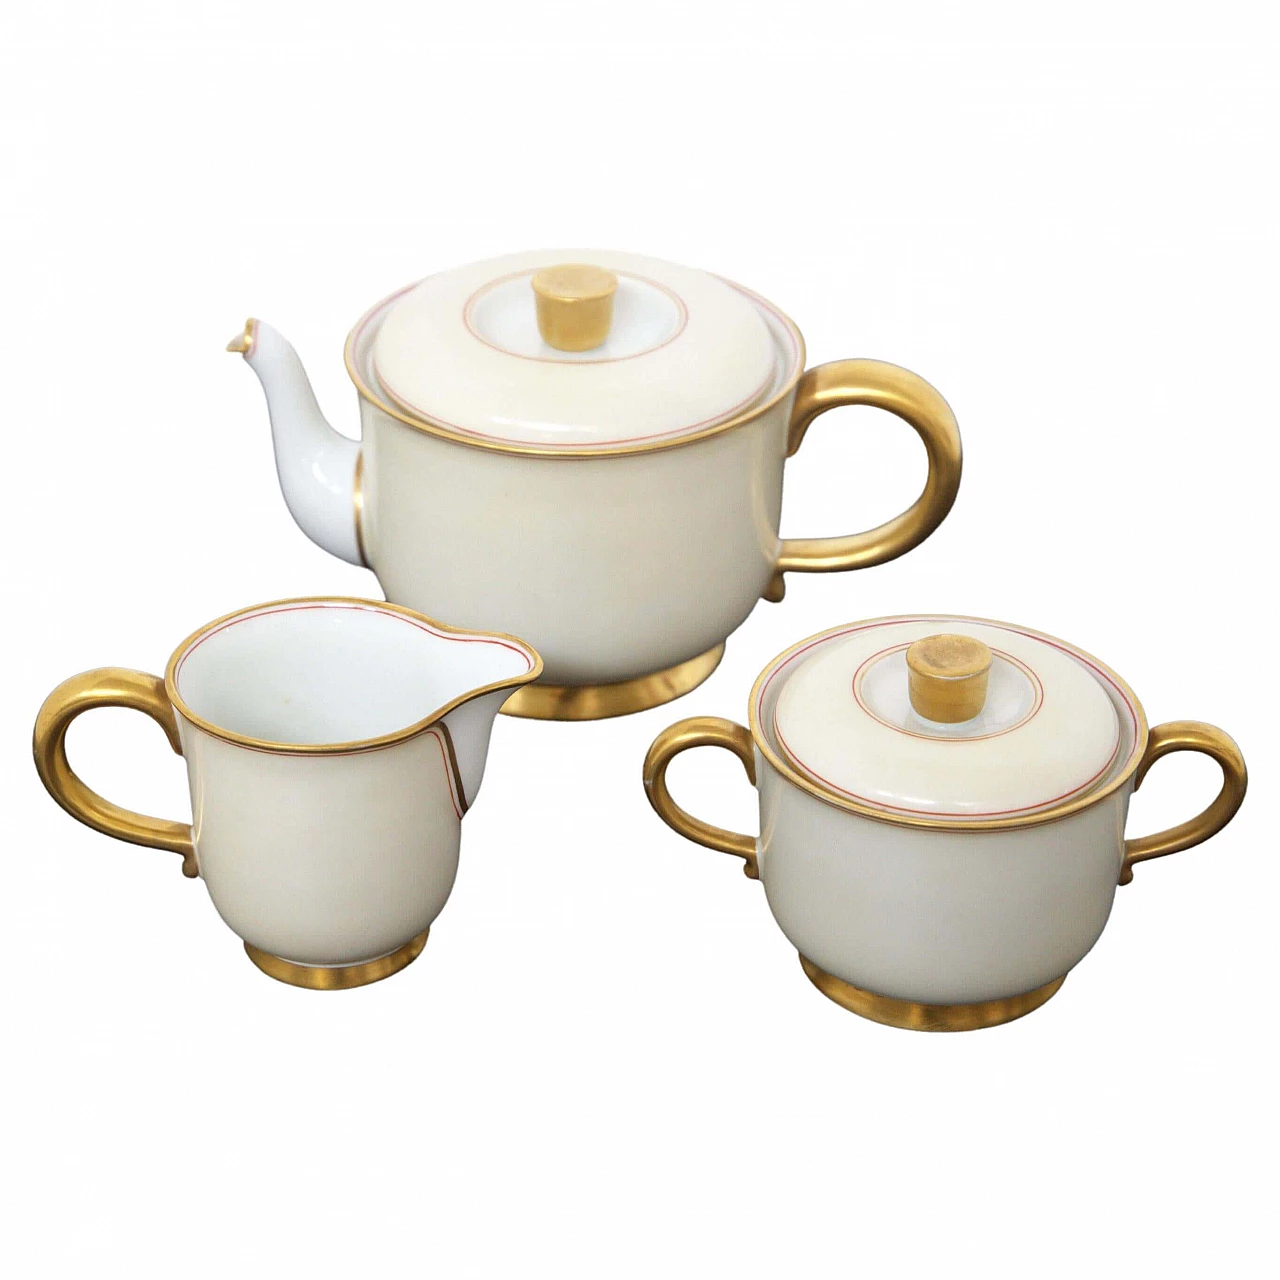 Ceramic and pure gold tea set by Gio Ponti for Ginori, 1930s 1477480